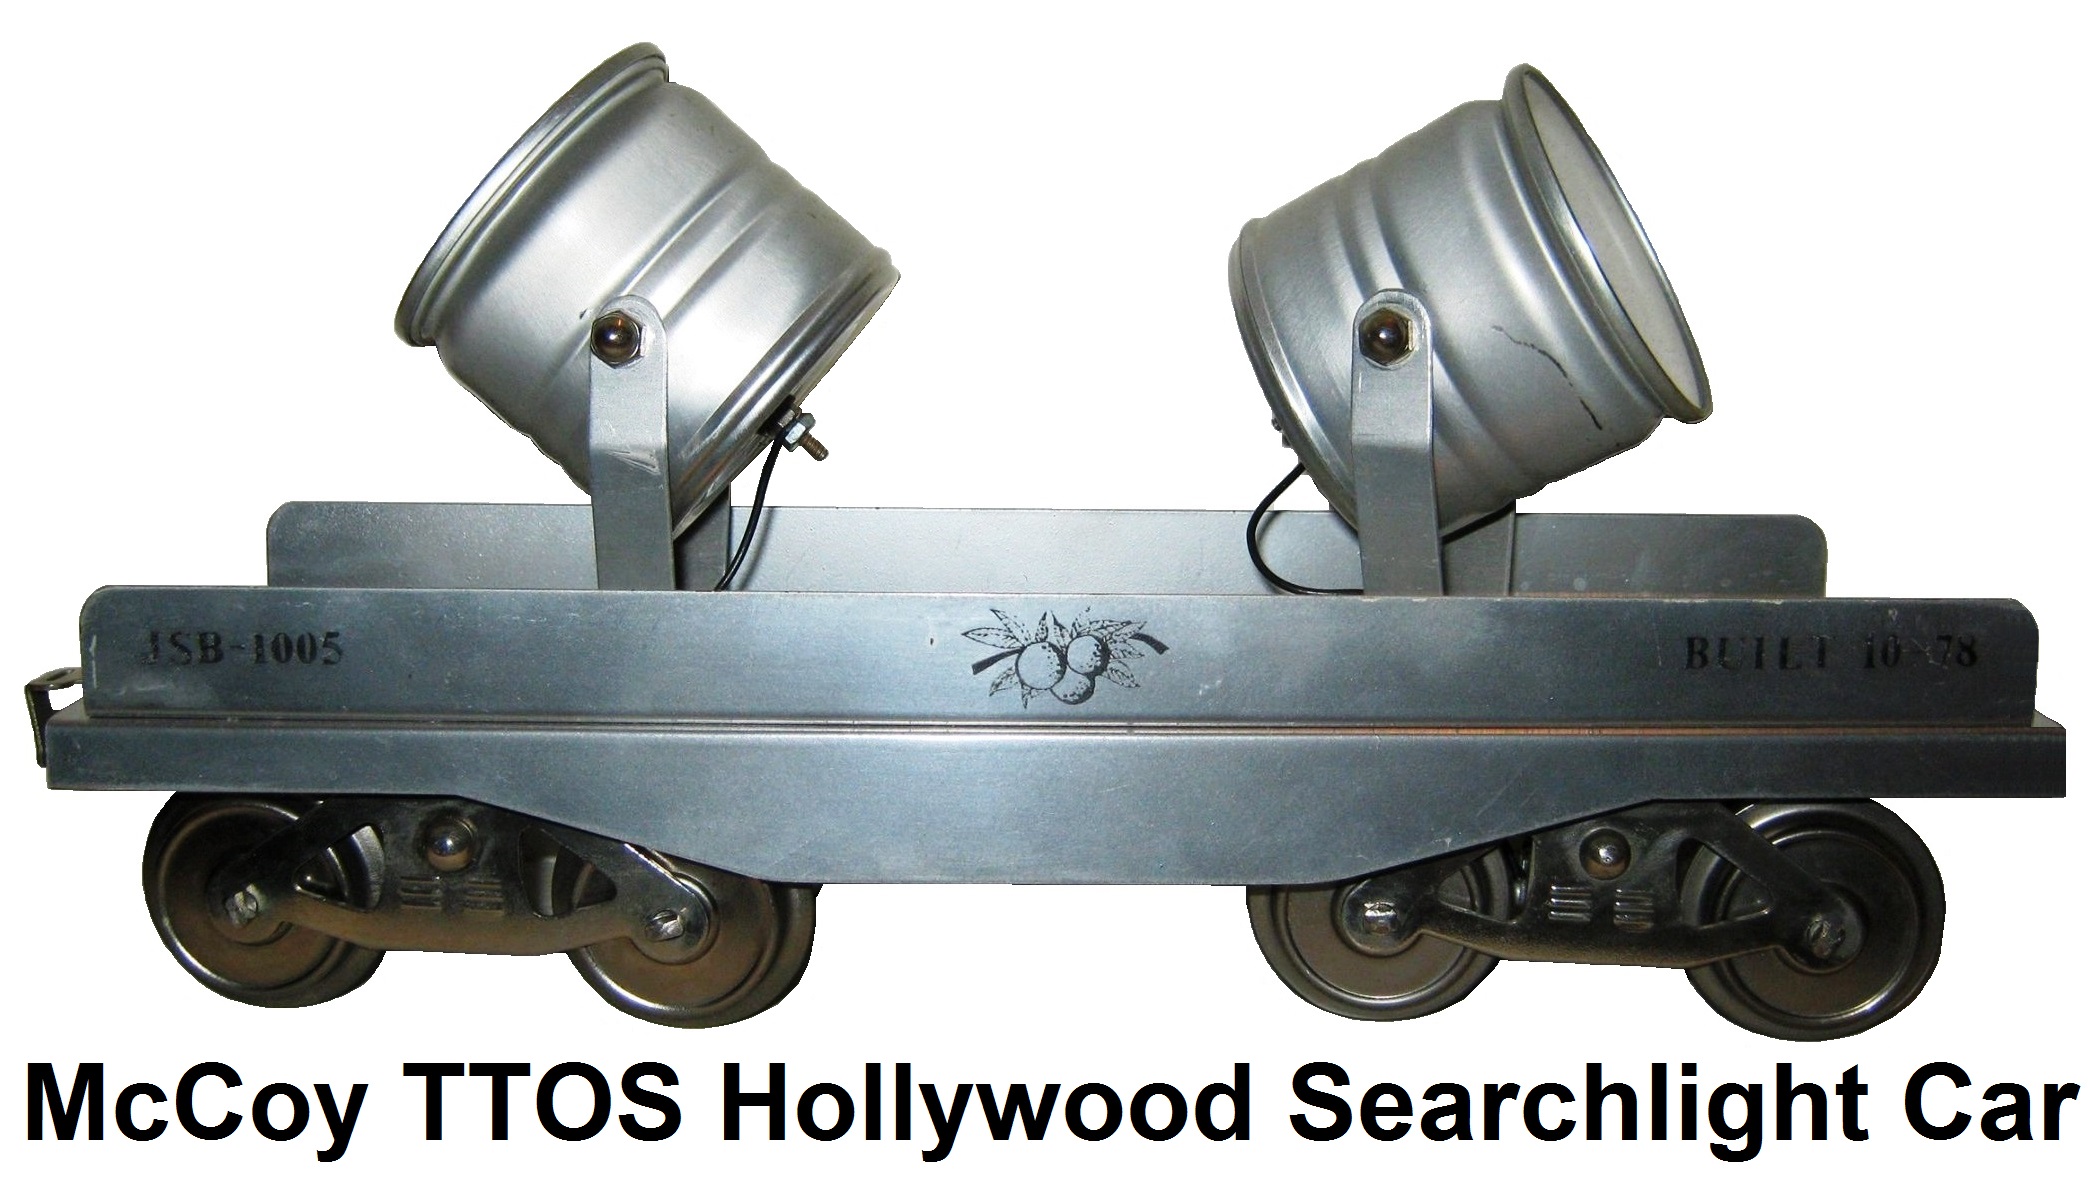 McCoy Standard gauge TTOS 1978 Hollywood searchlight car #JSB-1005 all silver, only 6 produced